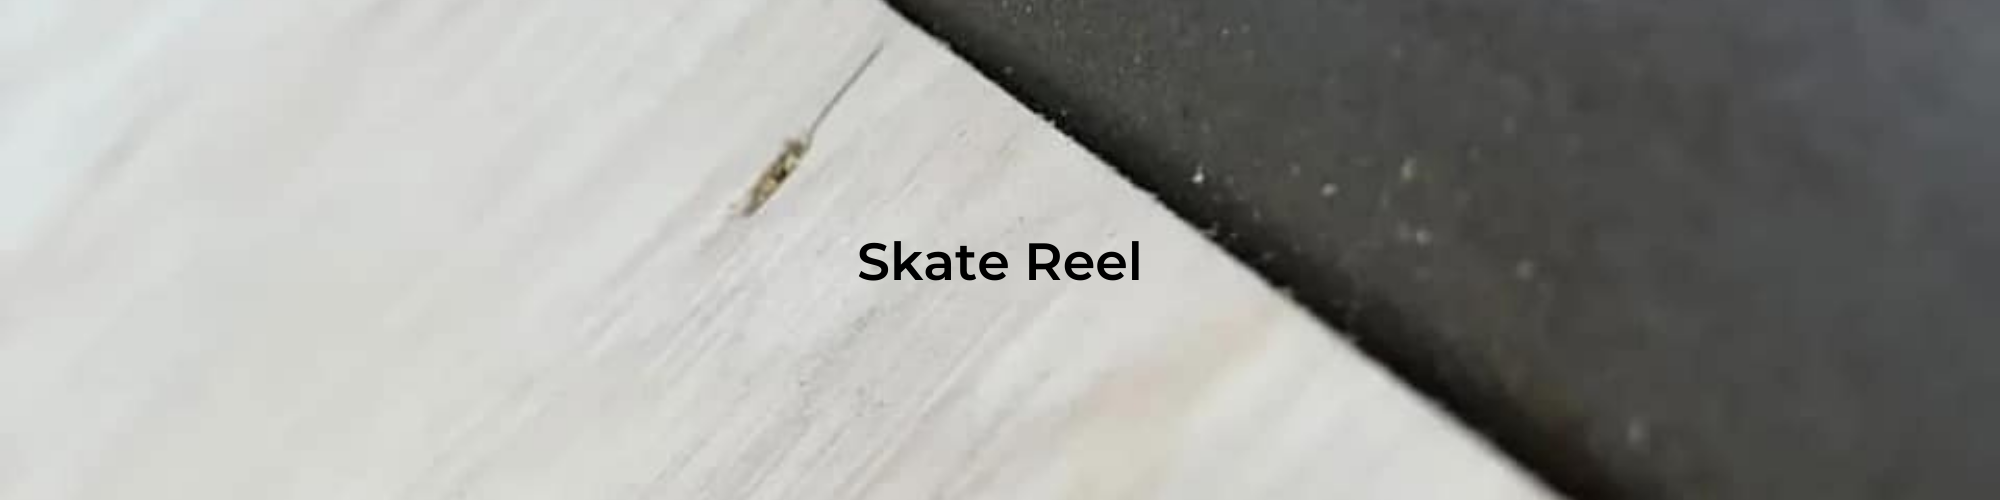 Skate Reel